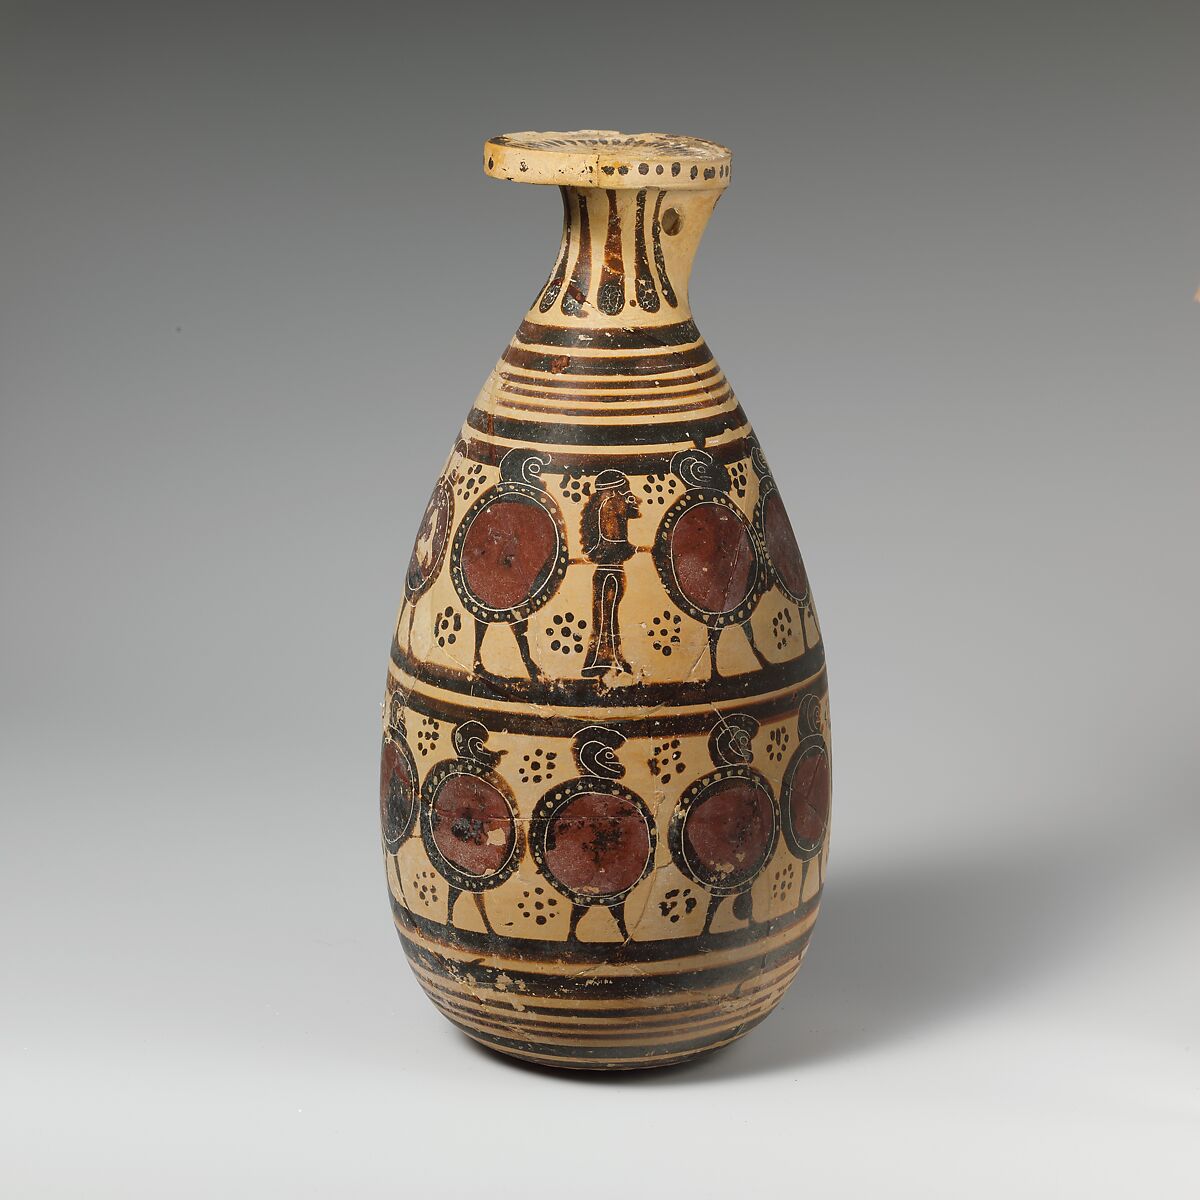 Terracotta alabastron (perfume vase), Attributed to the Late Warrior Frieze Vases, Terracotta, Greek, Corinthian 